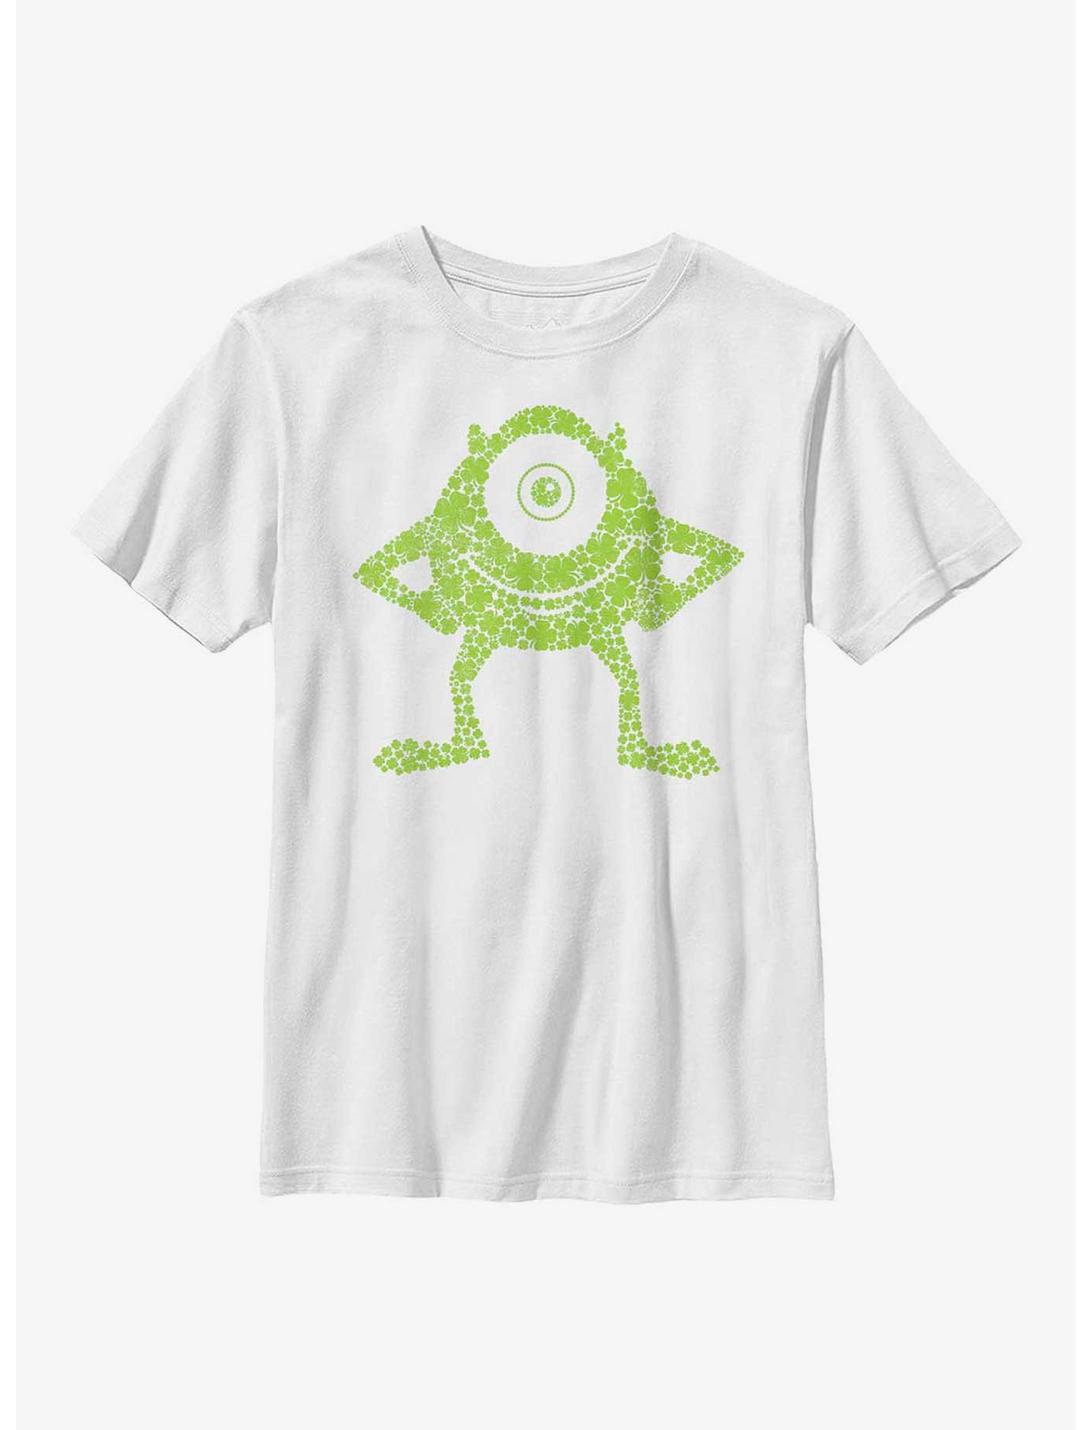 Disney Pixar Monsters, Inc. Mike Shamrock Youth T-Shirt, WHITE, hi-res